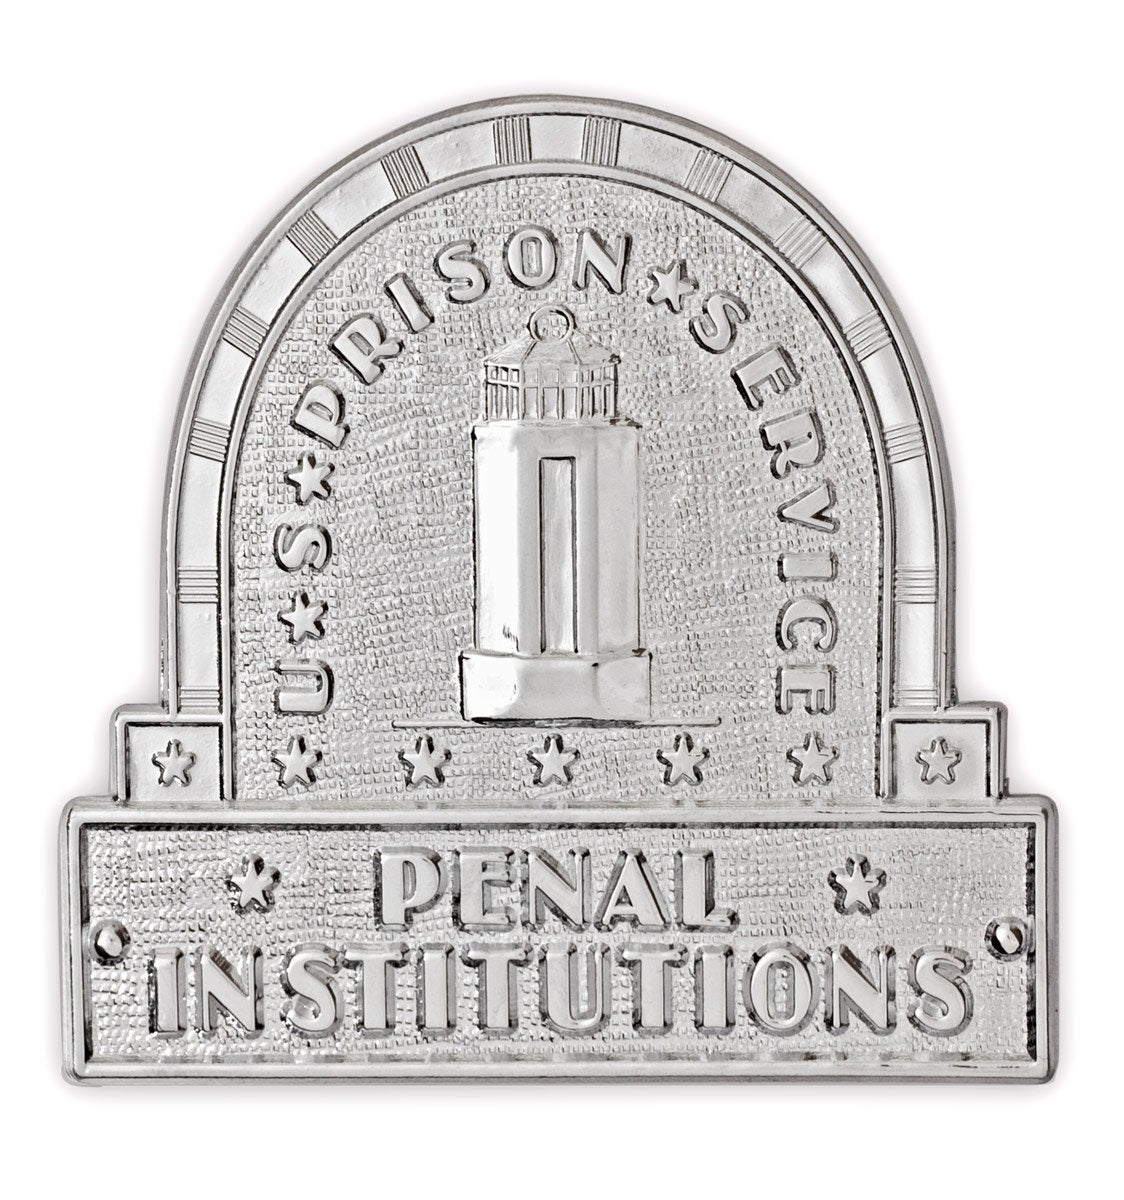 Replica metal US Penitentiary Alcatraz correctional officer guard hat pin, featuring US Prison Service logo.